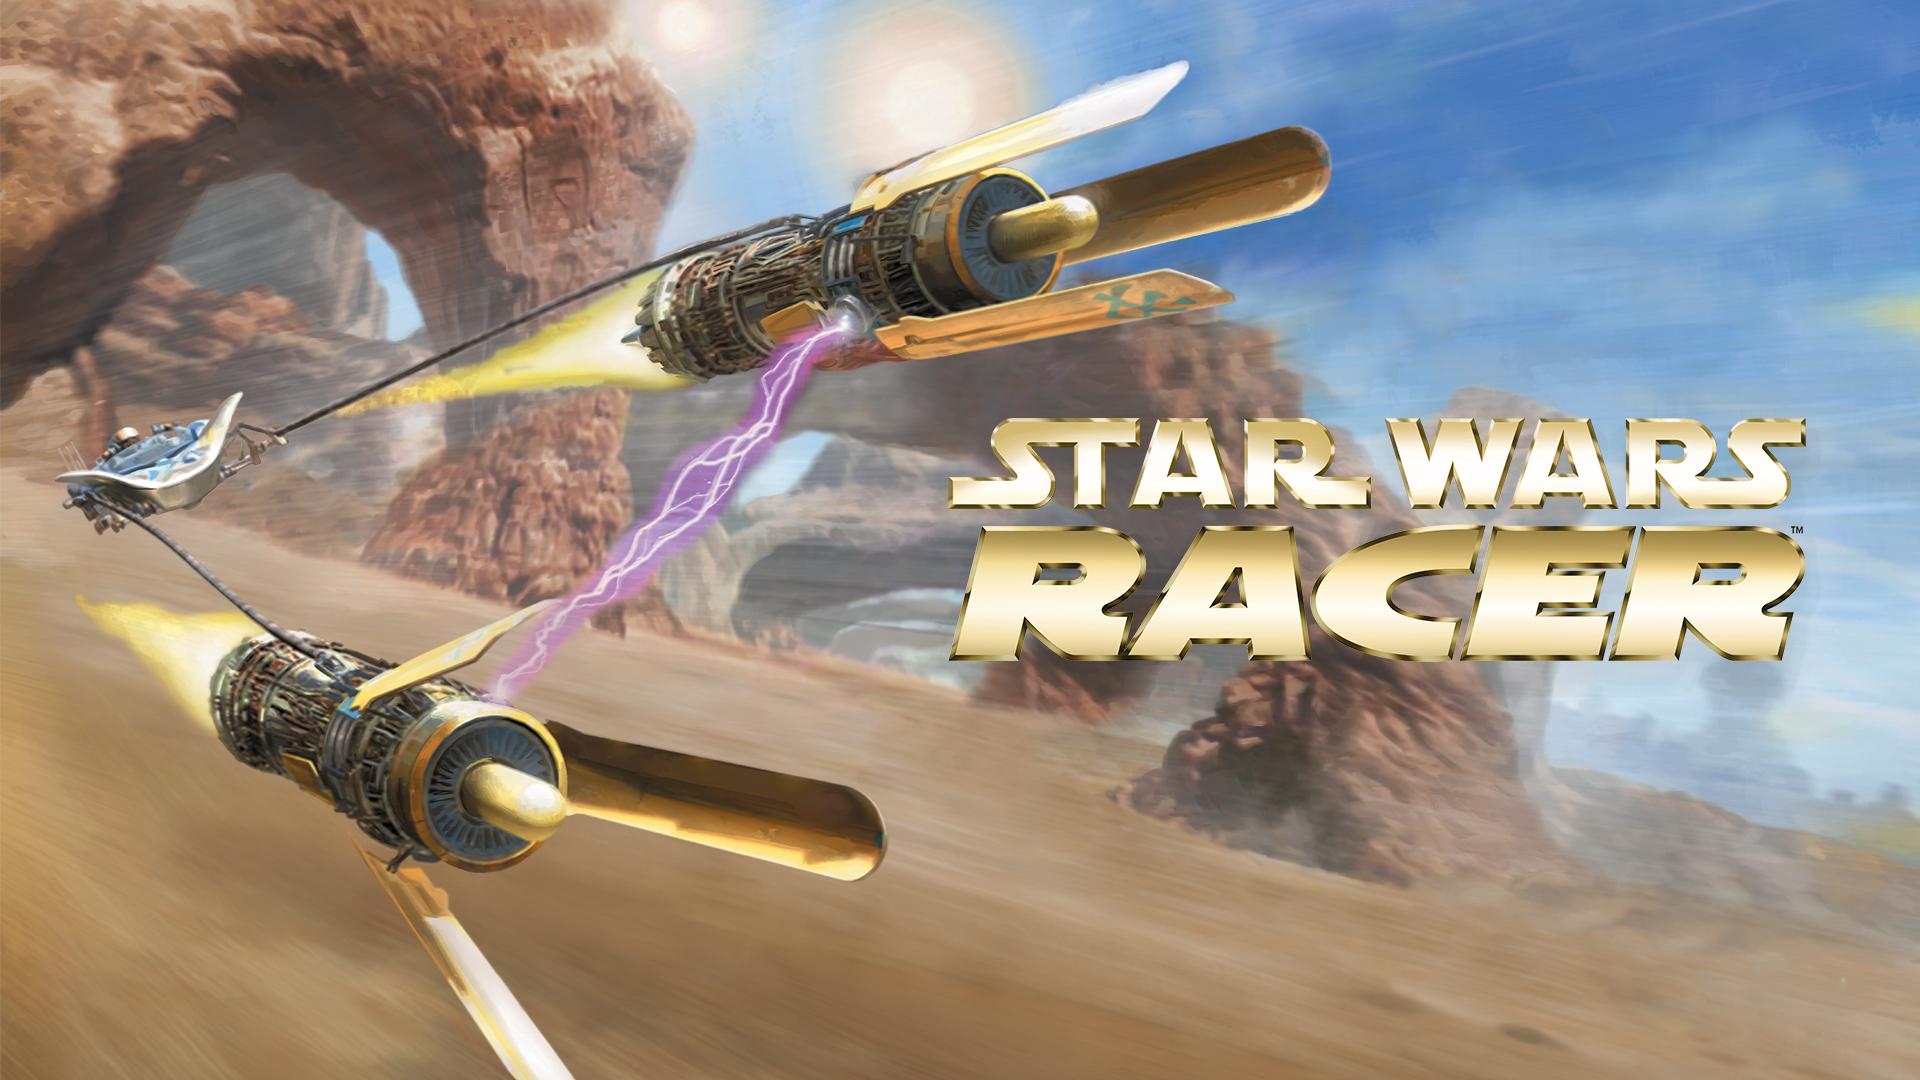 Star Wars Episode I Racer Nintendo Switch for $11.25